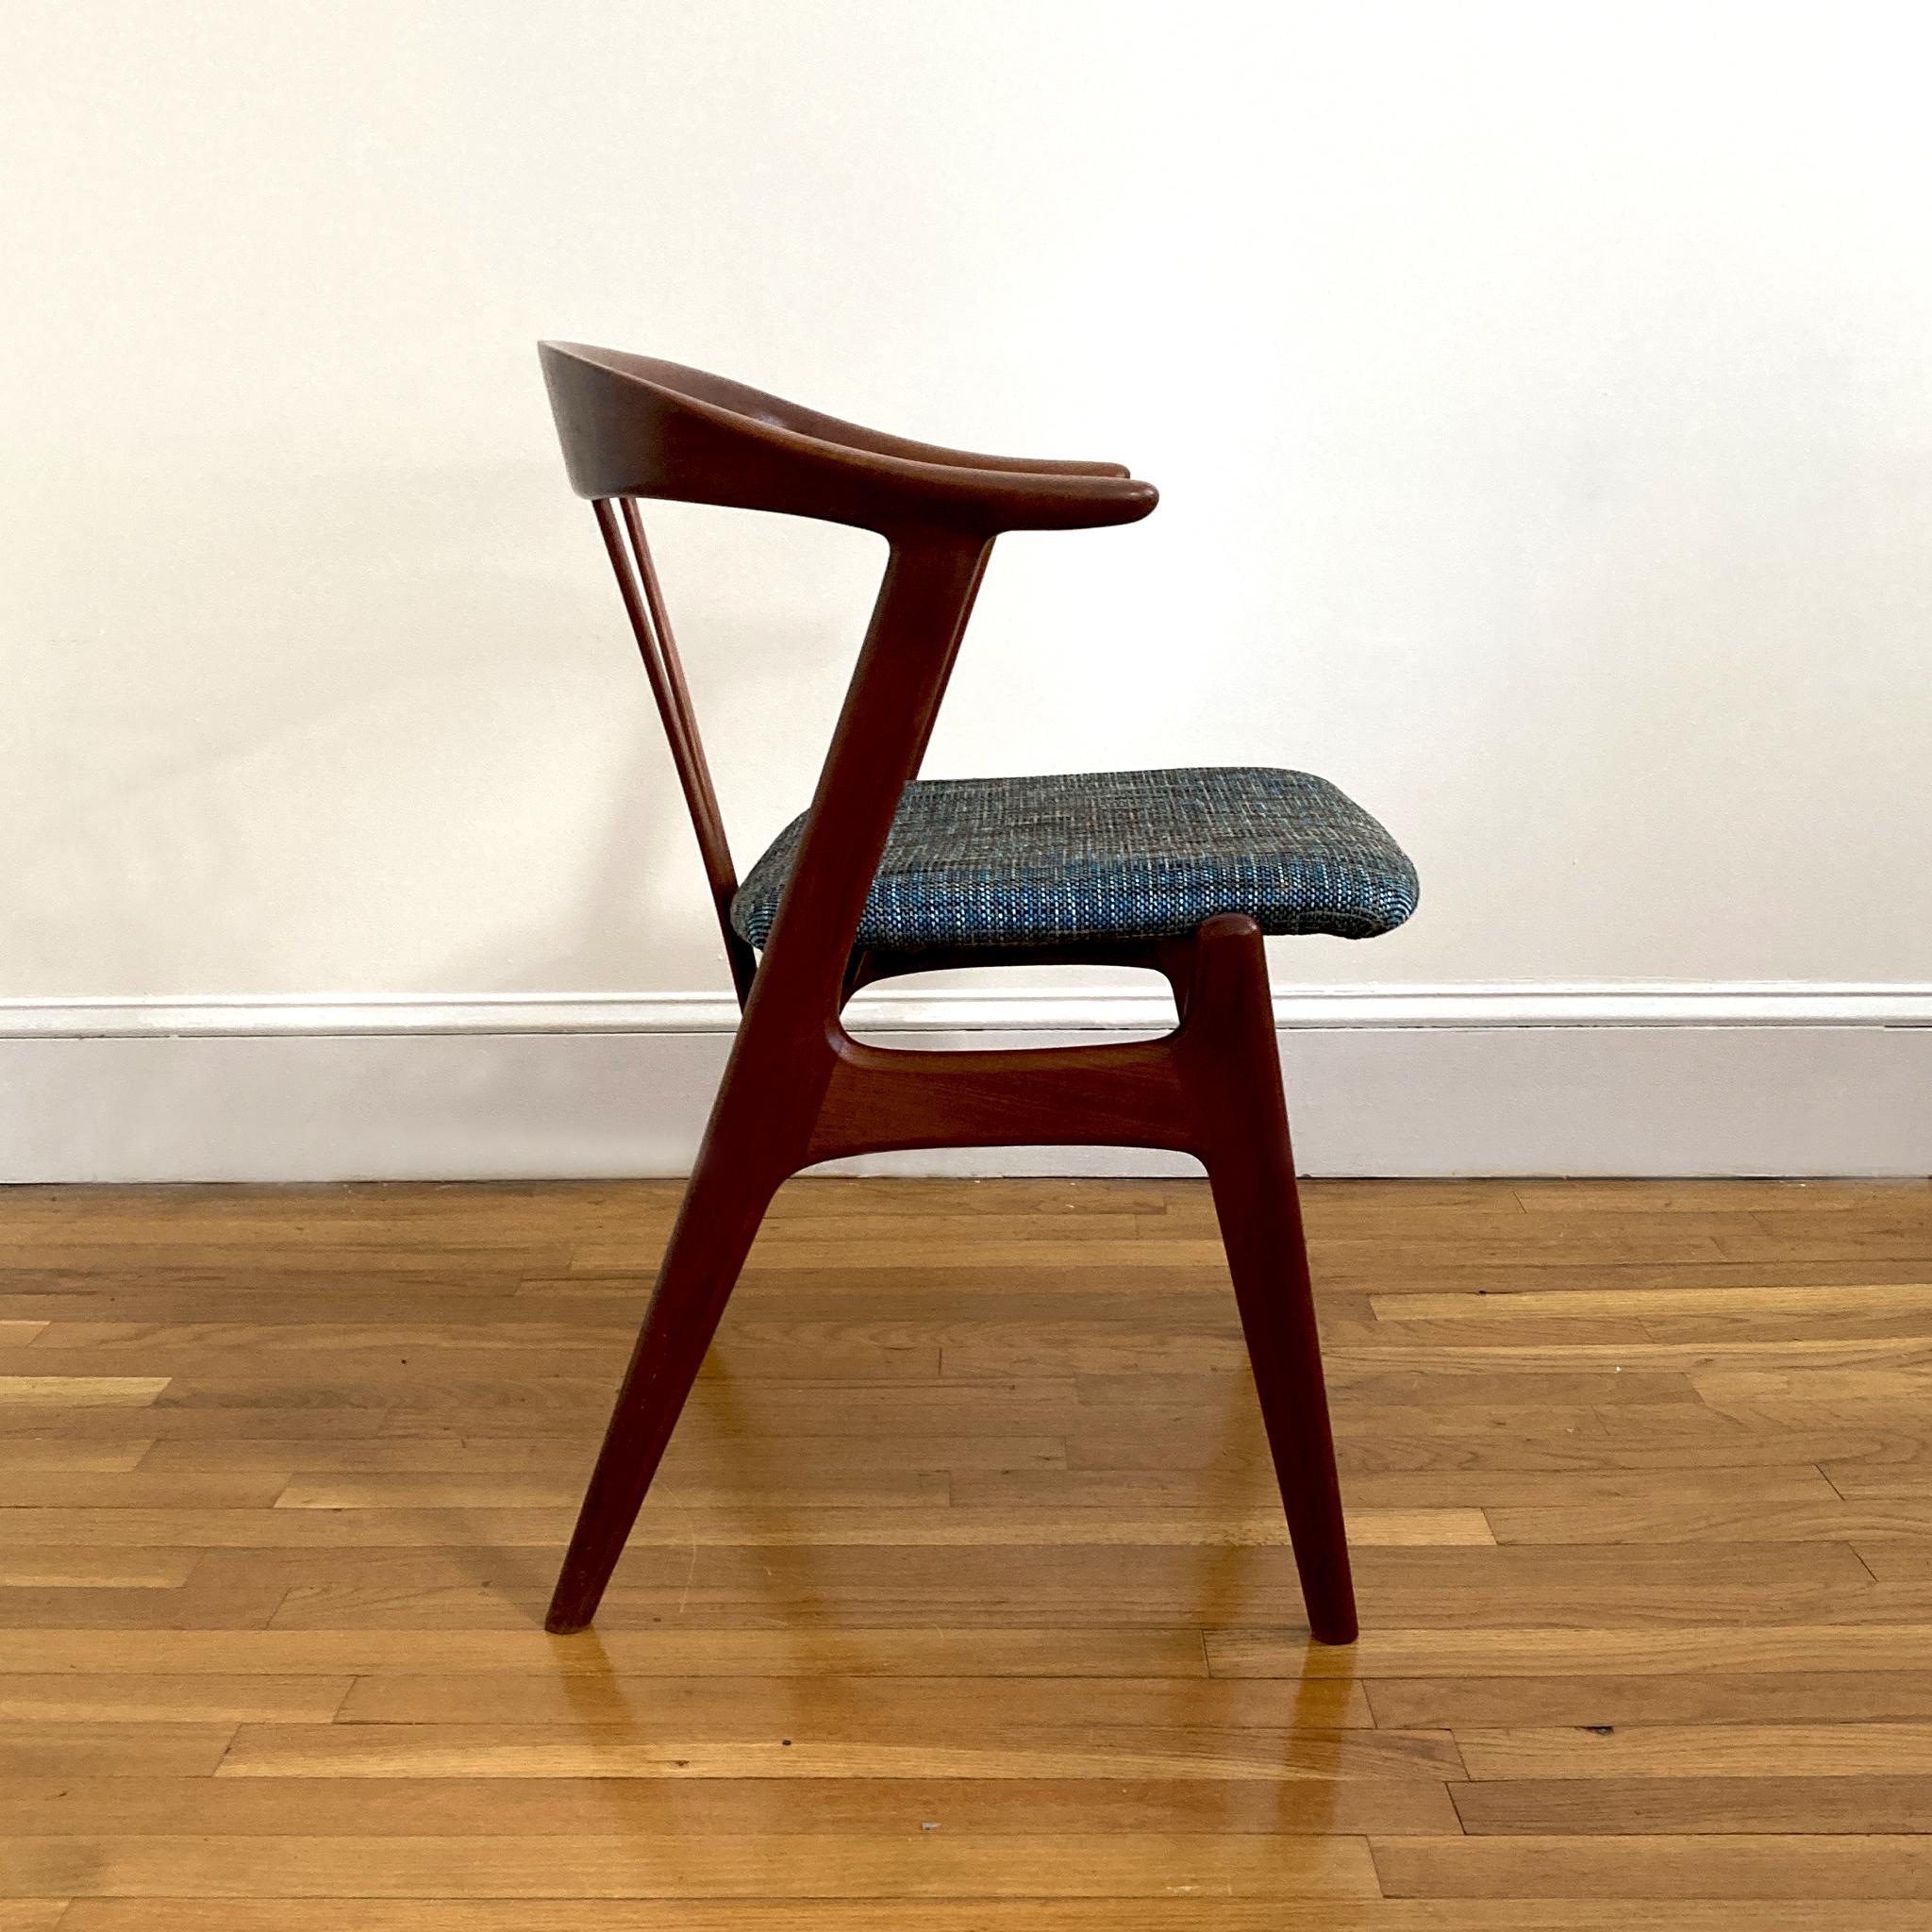 Norwegian Torbjørn Afdal Teak Form Chair with Green Teal Upholstery, 1950s For Sale